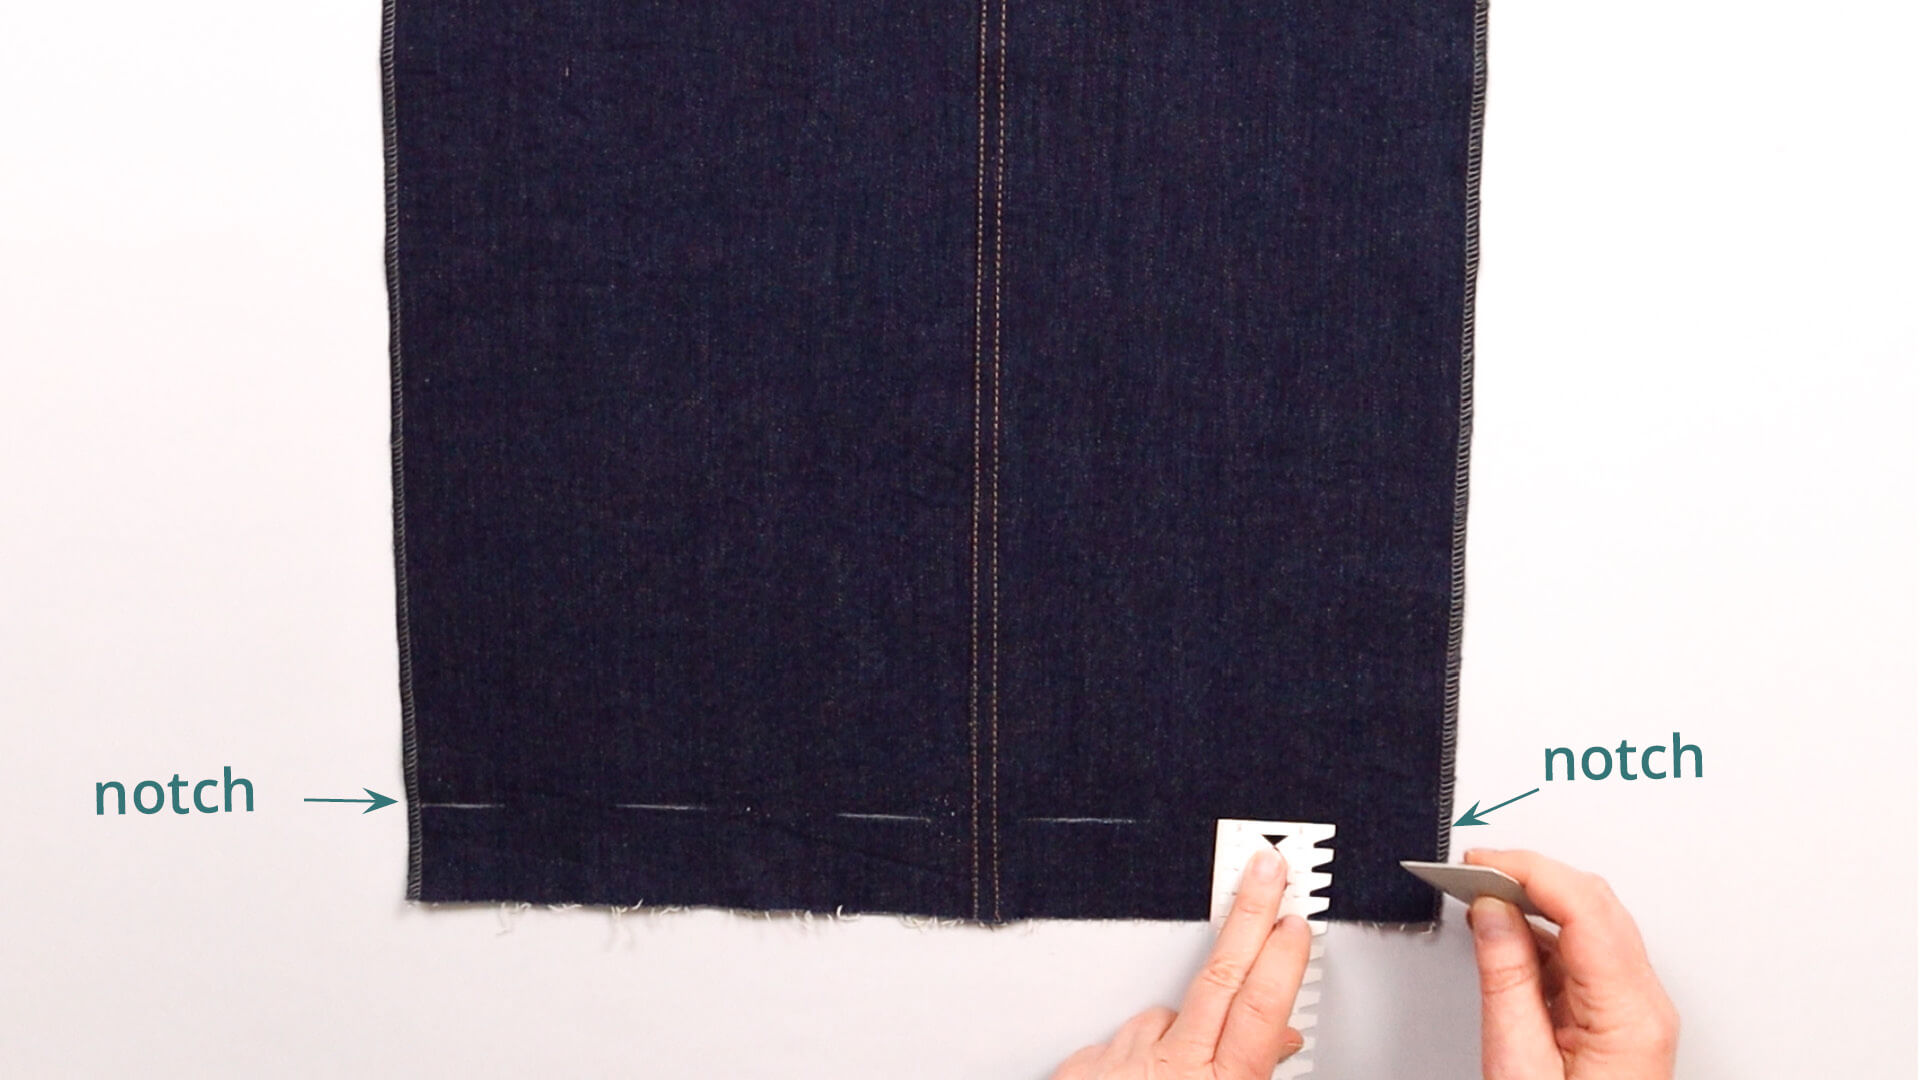 smartPATTERN sewing instructions Sew cut trouser hem to denim trousers - mark the finished hem